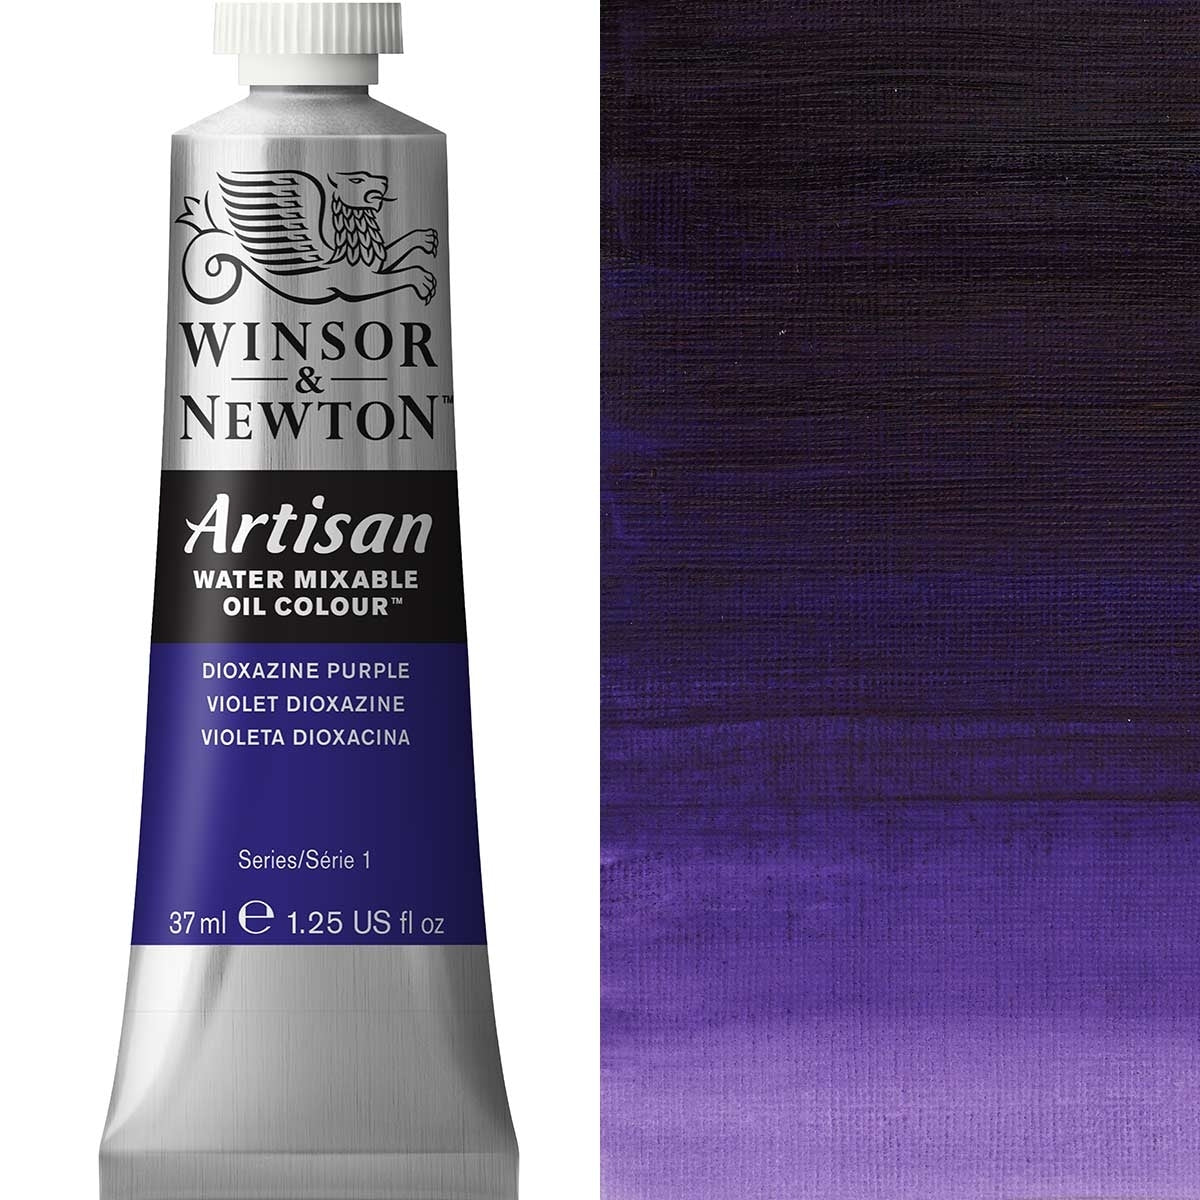 Winsor and Newton - Artisan Oil Colour Watermixable - 37ml - Dioxazine Purple